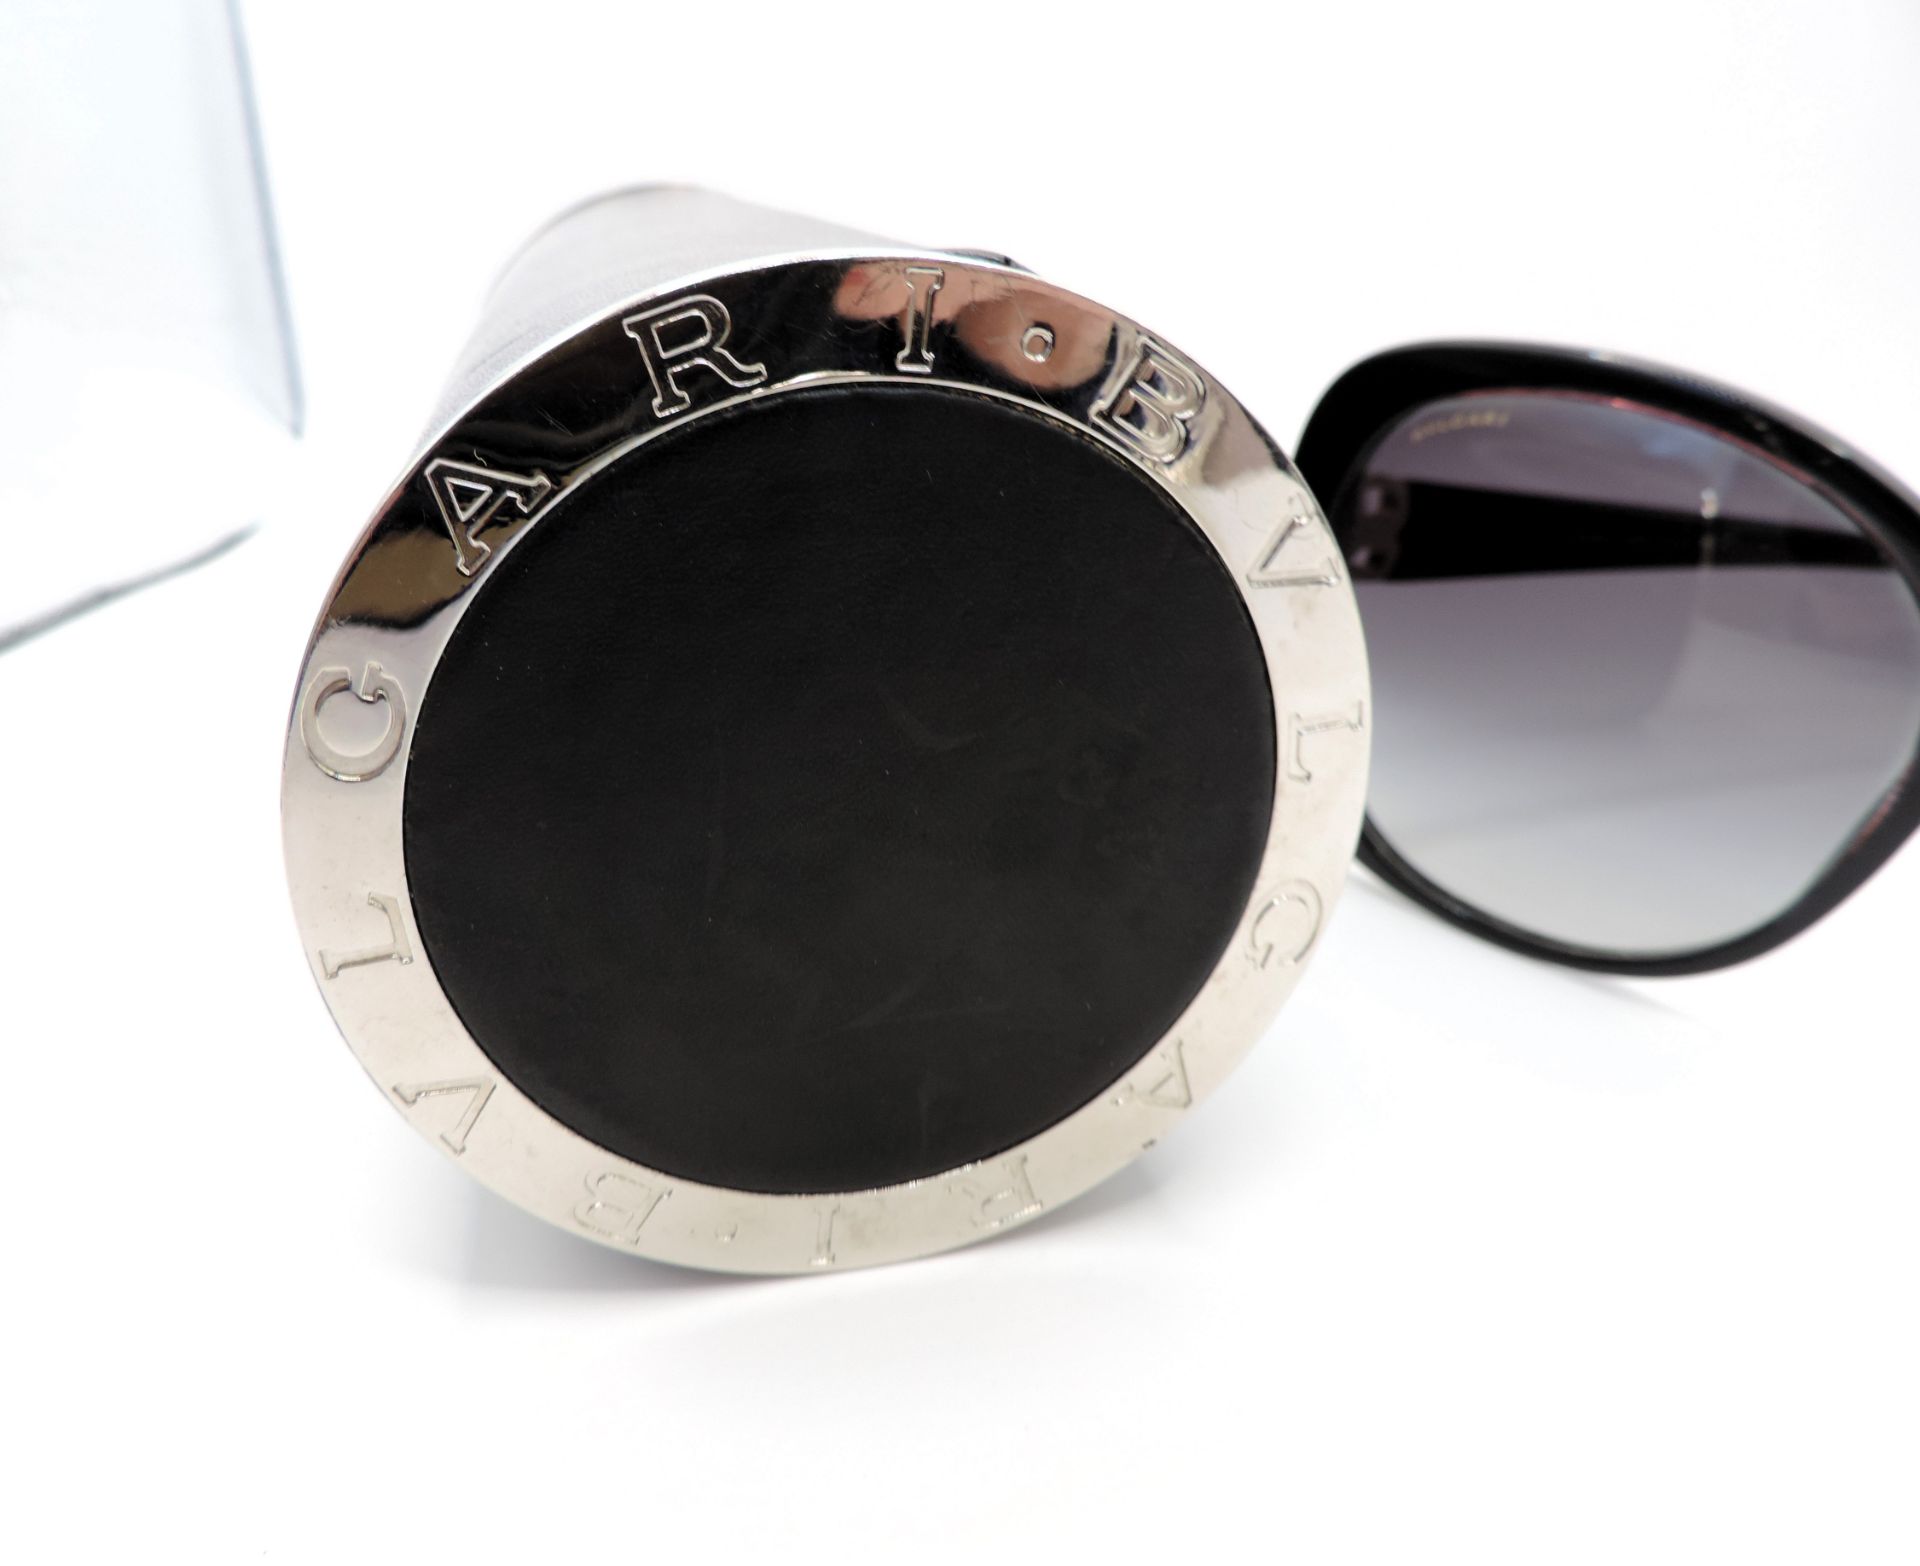 BVLGARI Black Sunglasses 8171-C Jewelled Hinged Detail New With Box & Certificate - Image 5 of 17